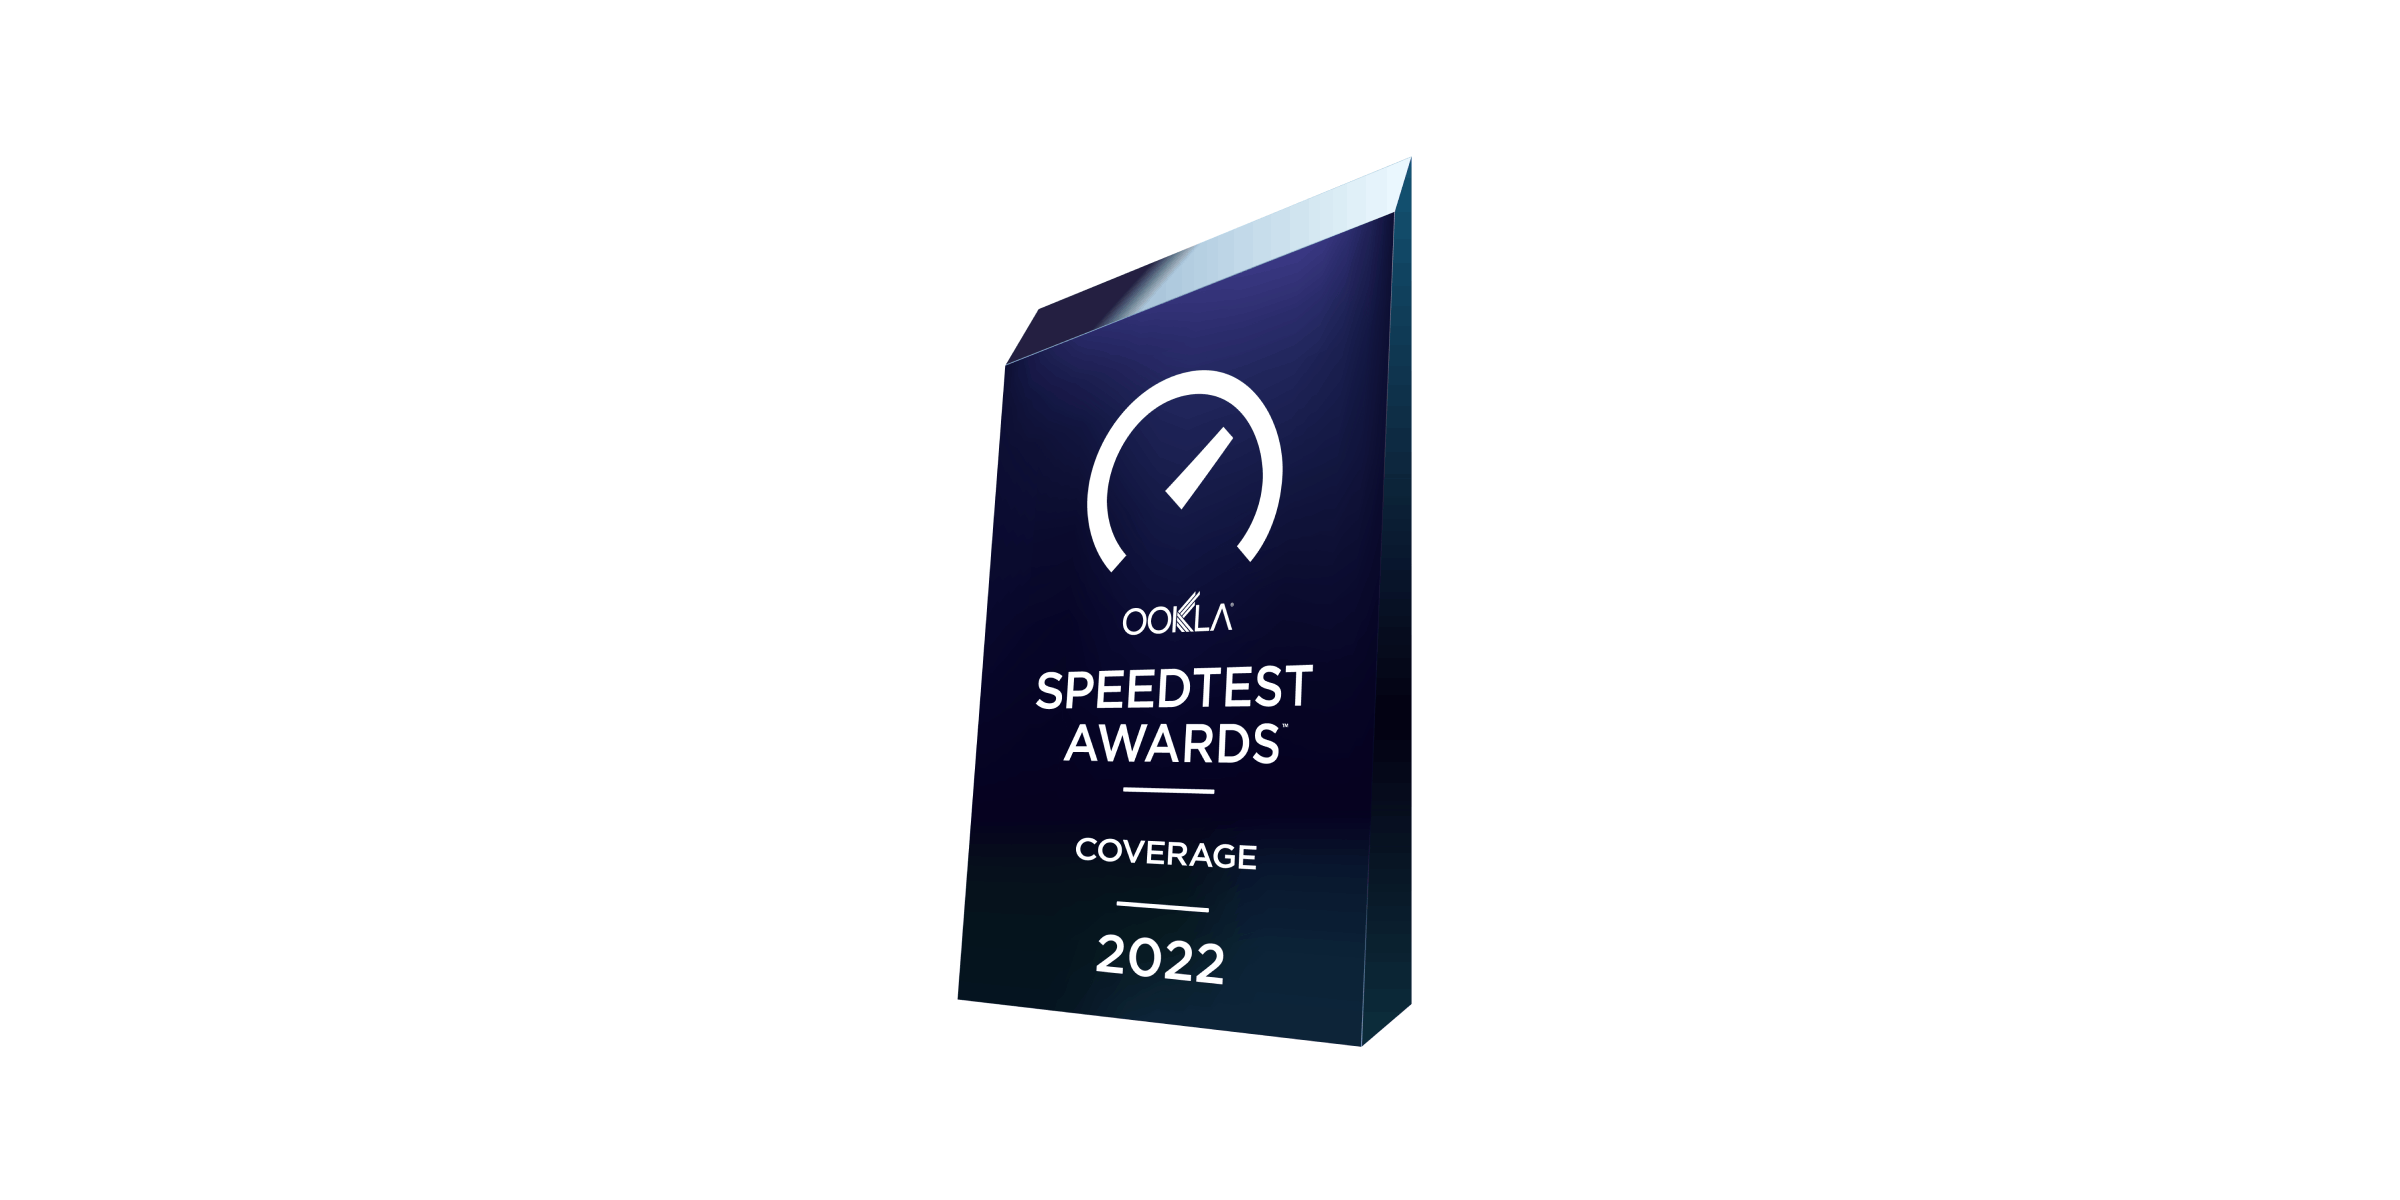 Speedtest awards: coverage 2021